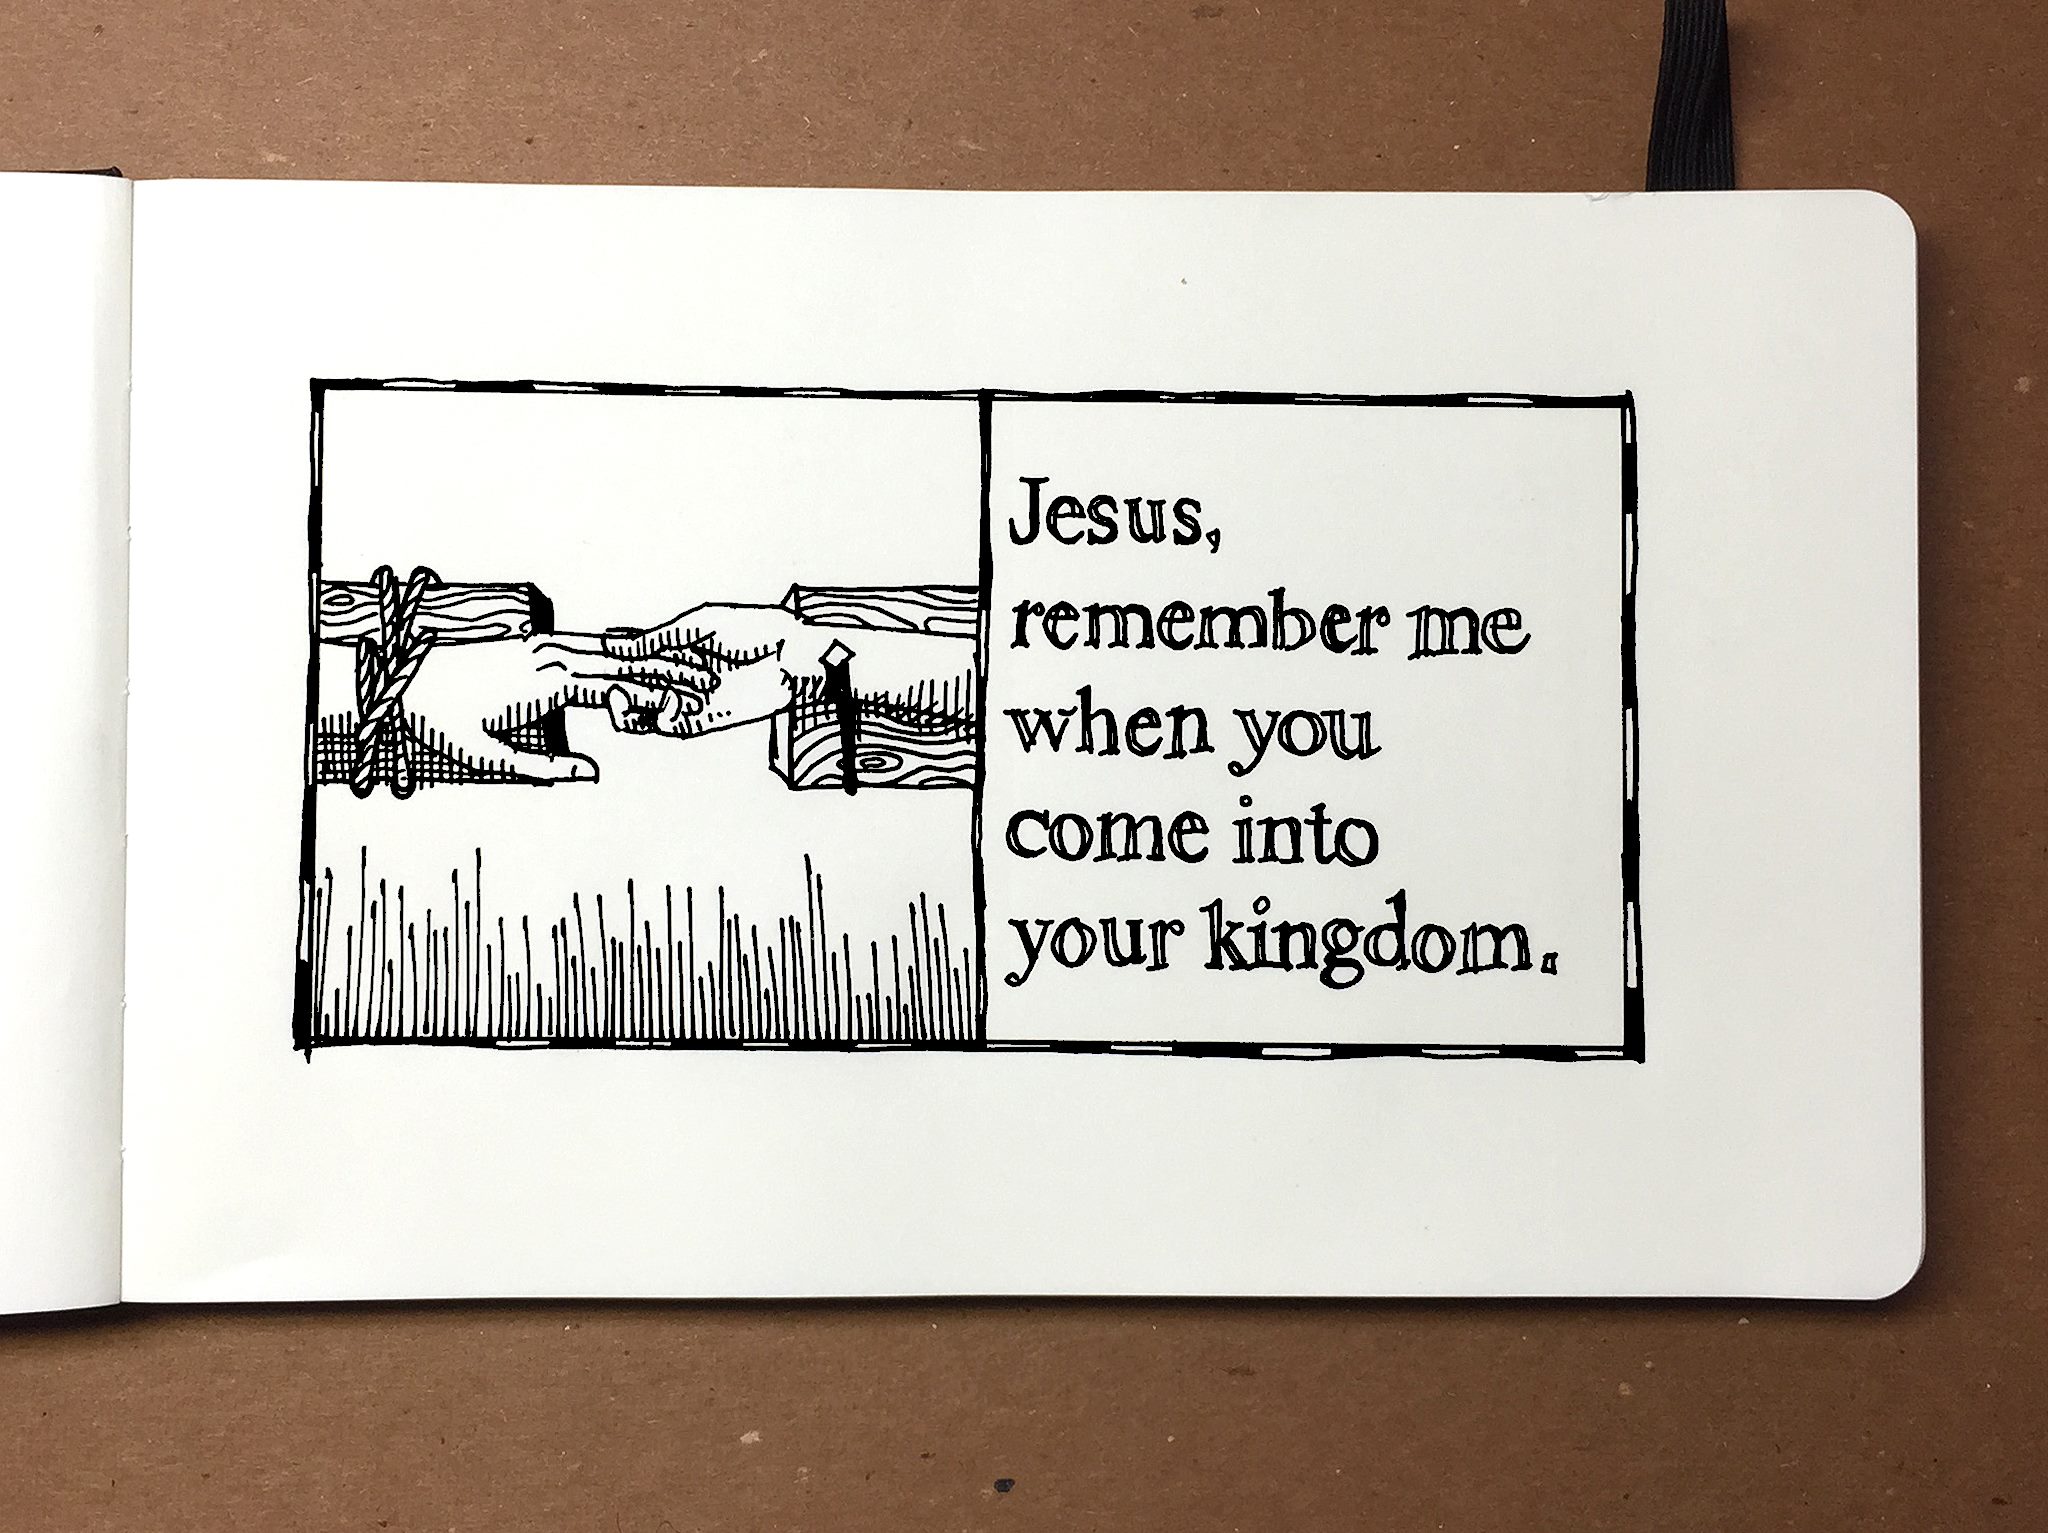 Station Eleven: Jesus Promises His Kingdom